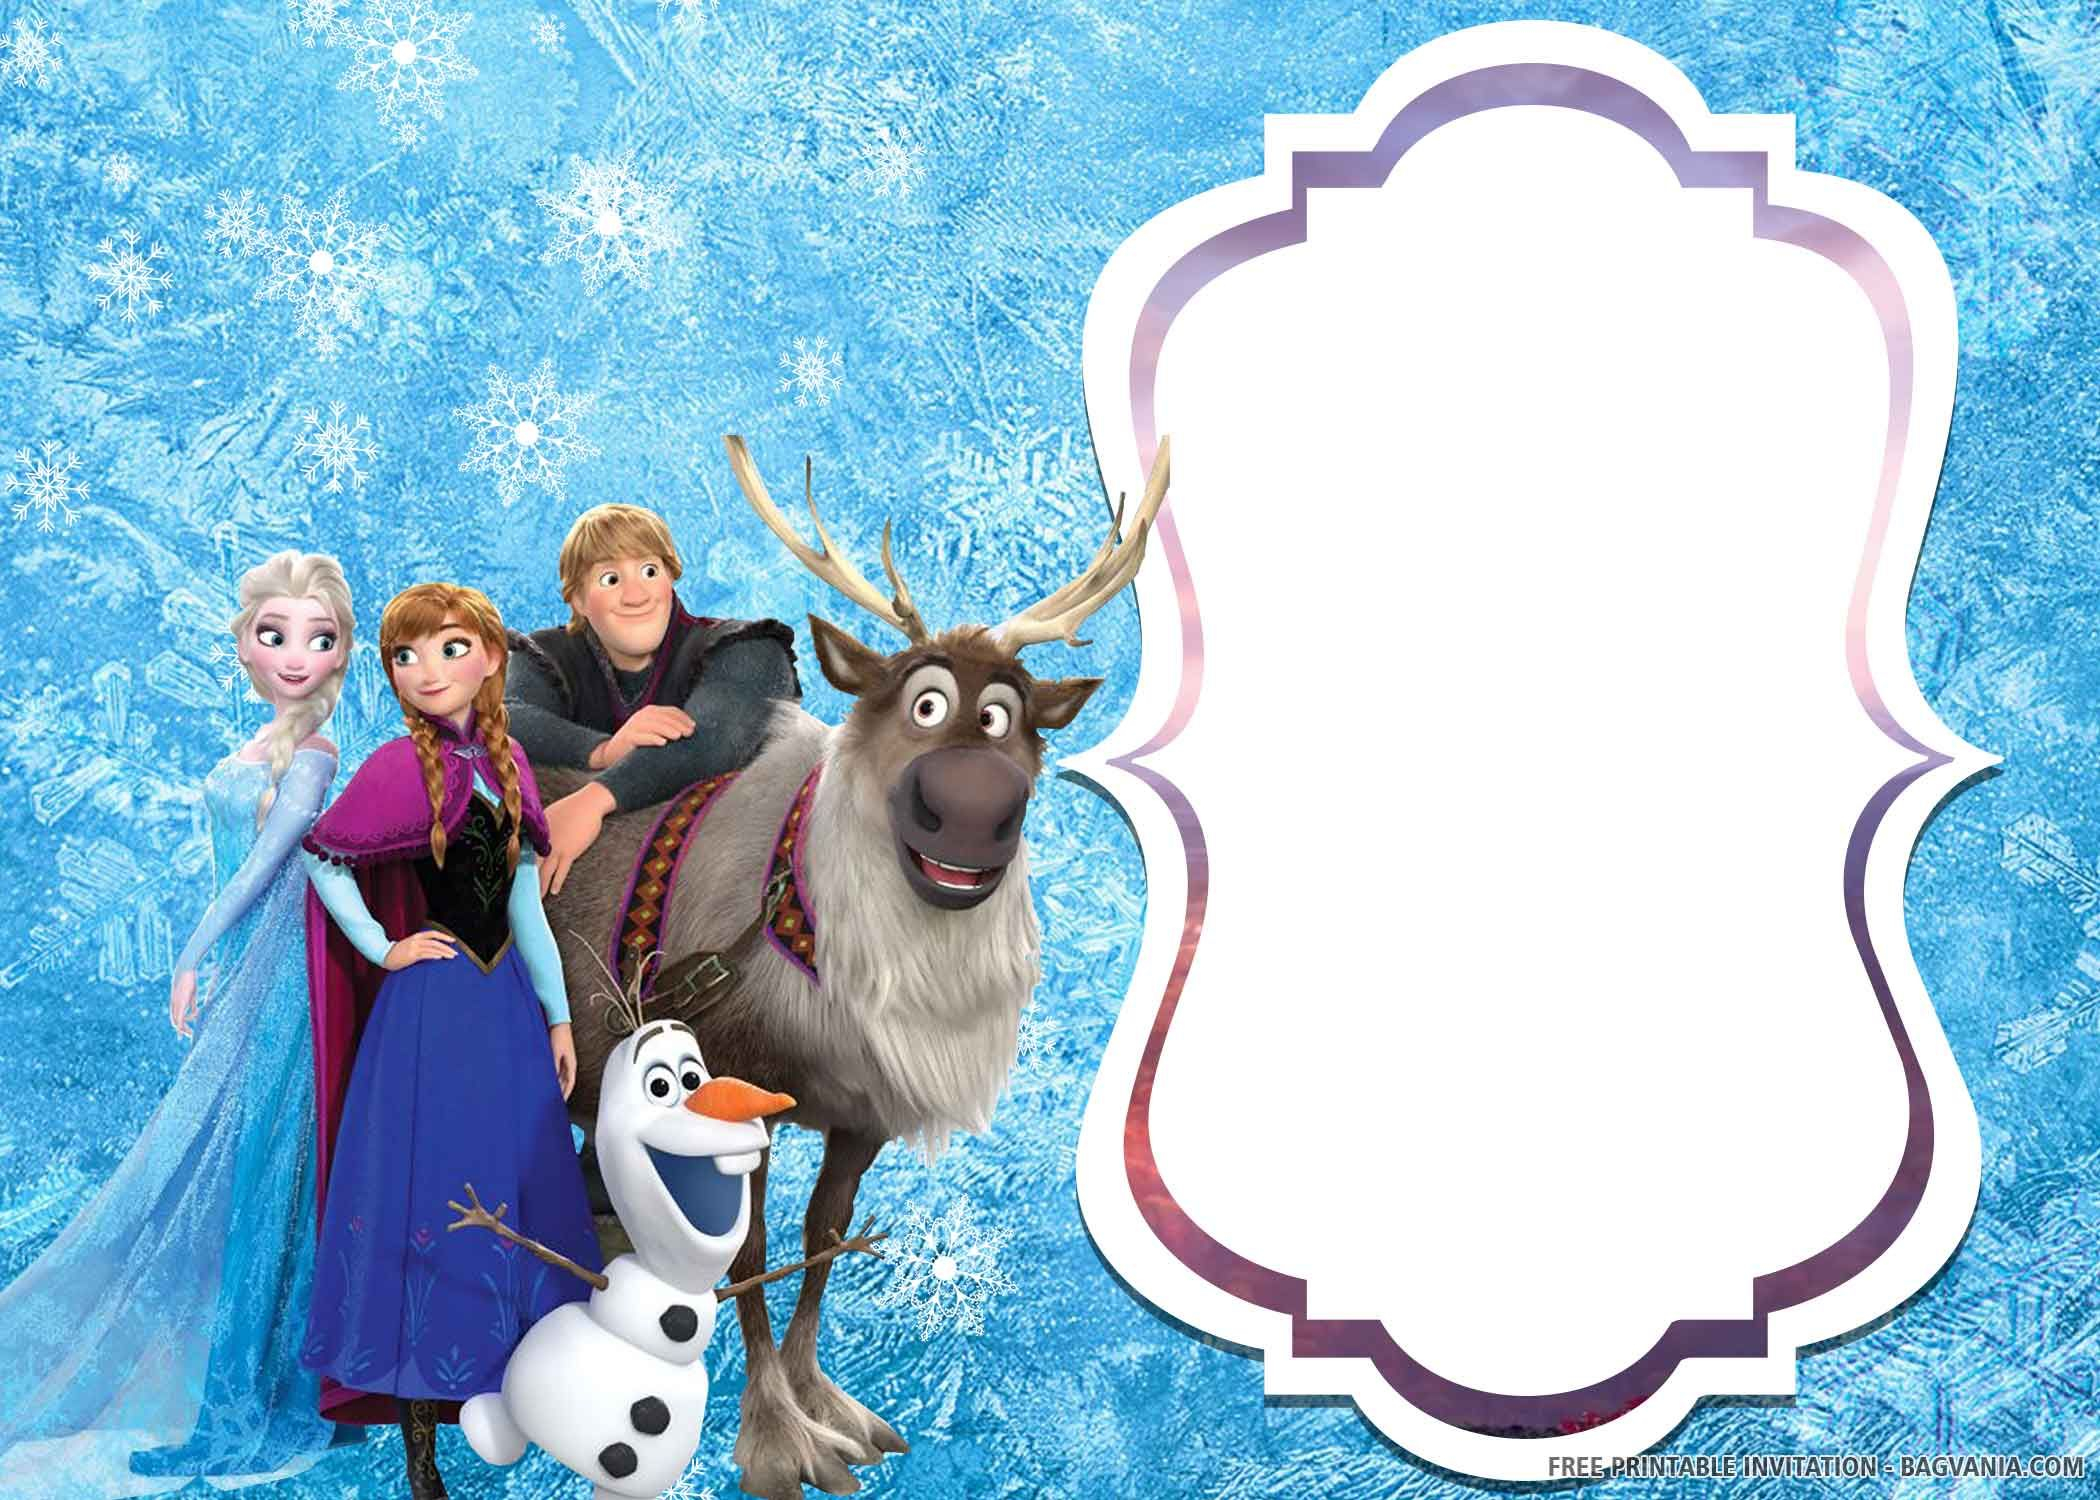  FREE PRINTABLE Elsa Of Frozen 2 Birthday Invitation Templates 